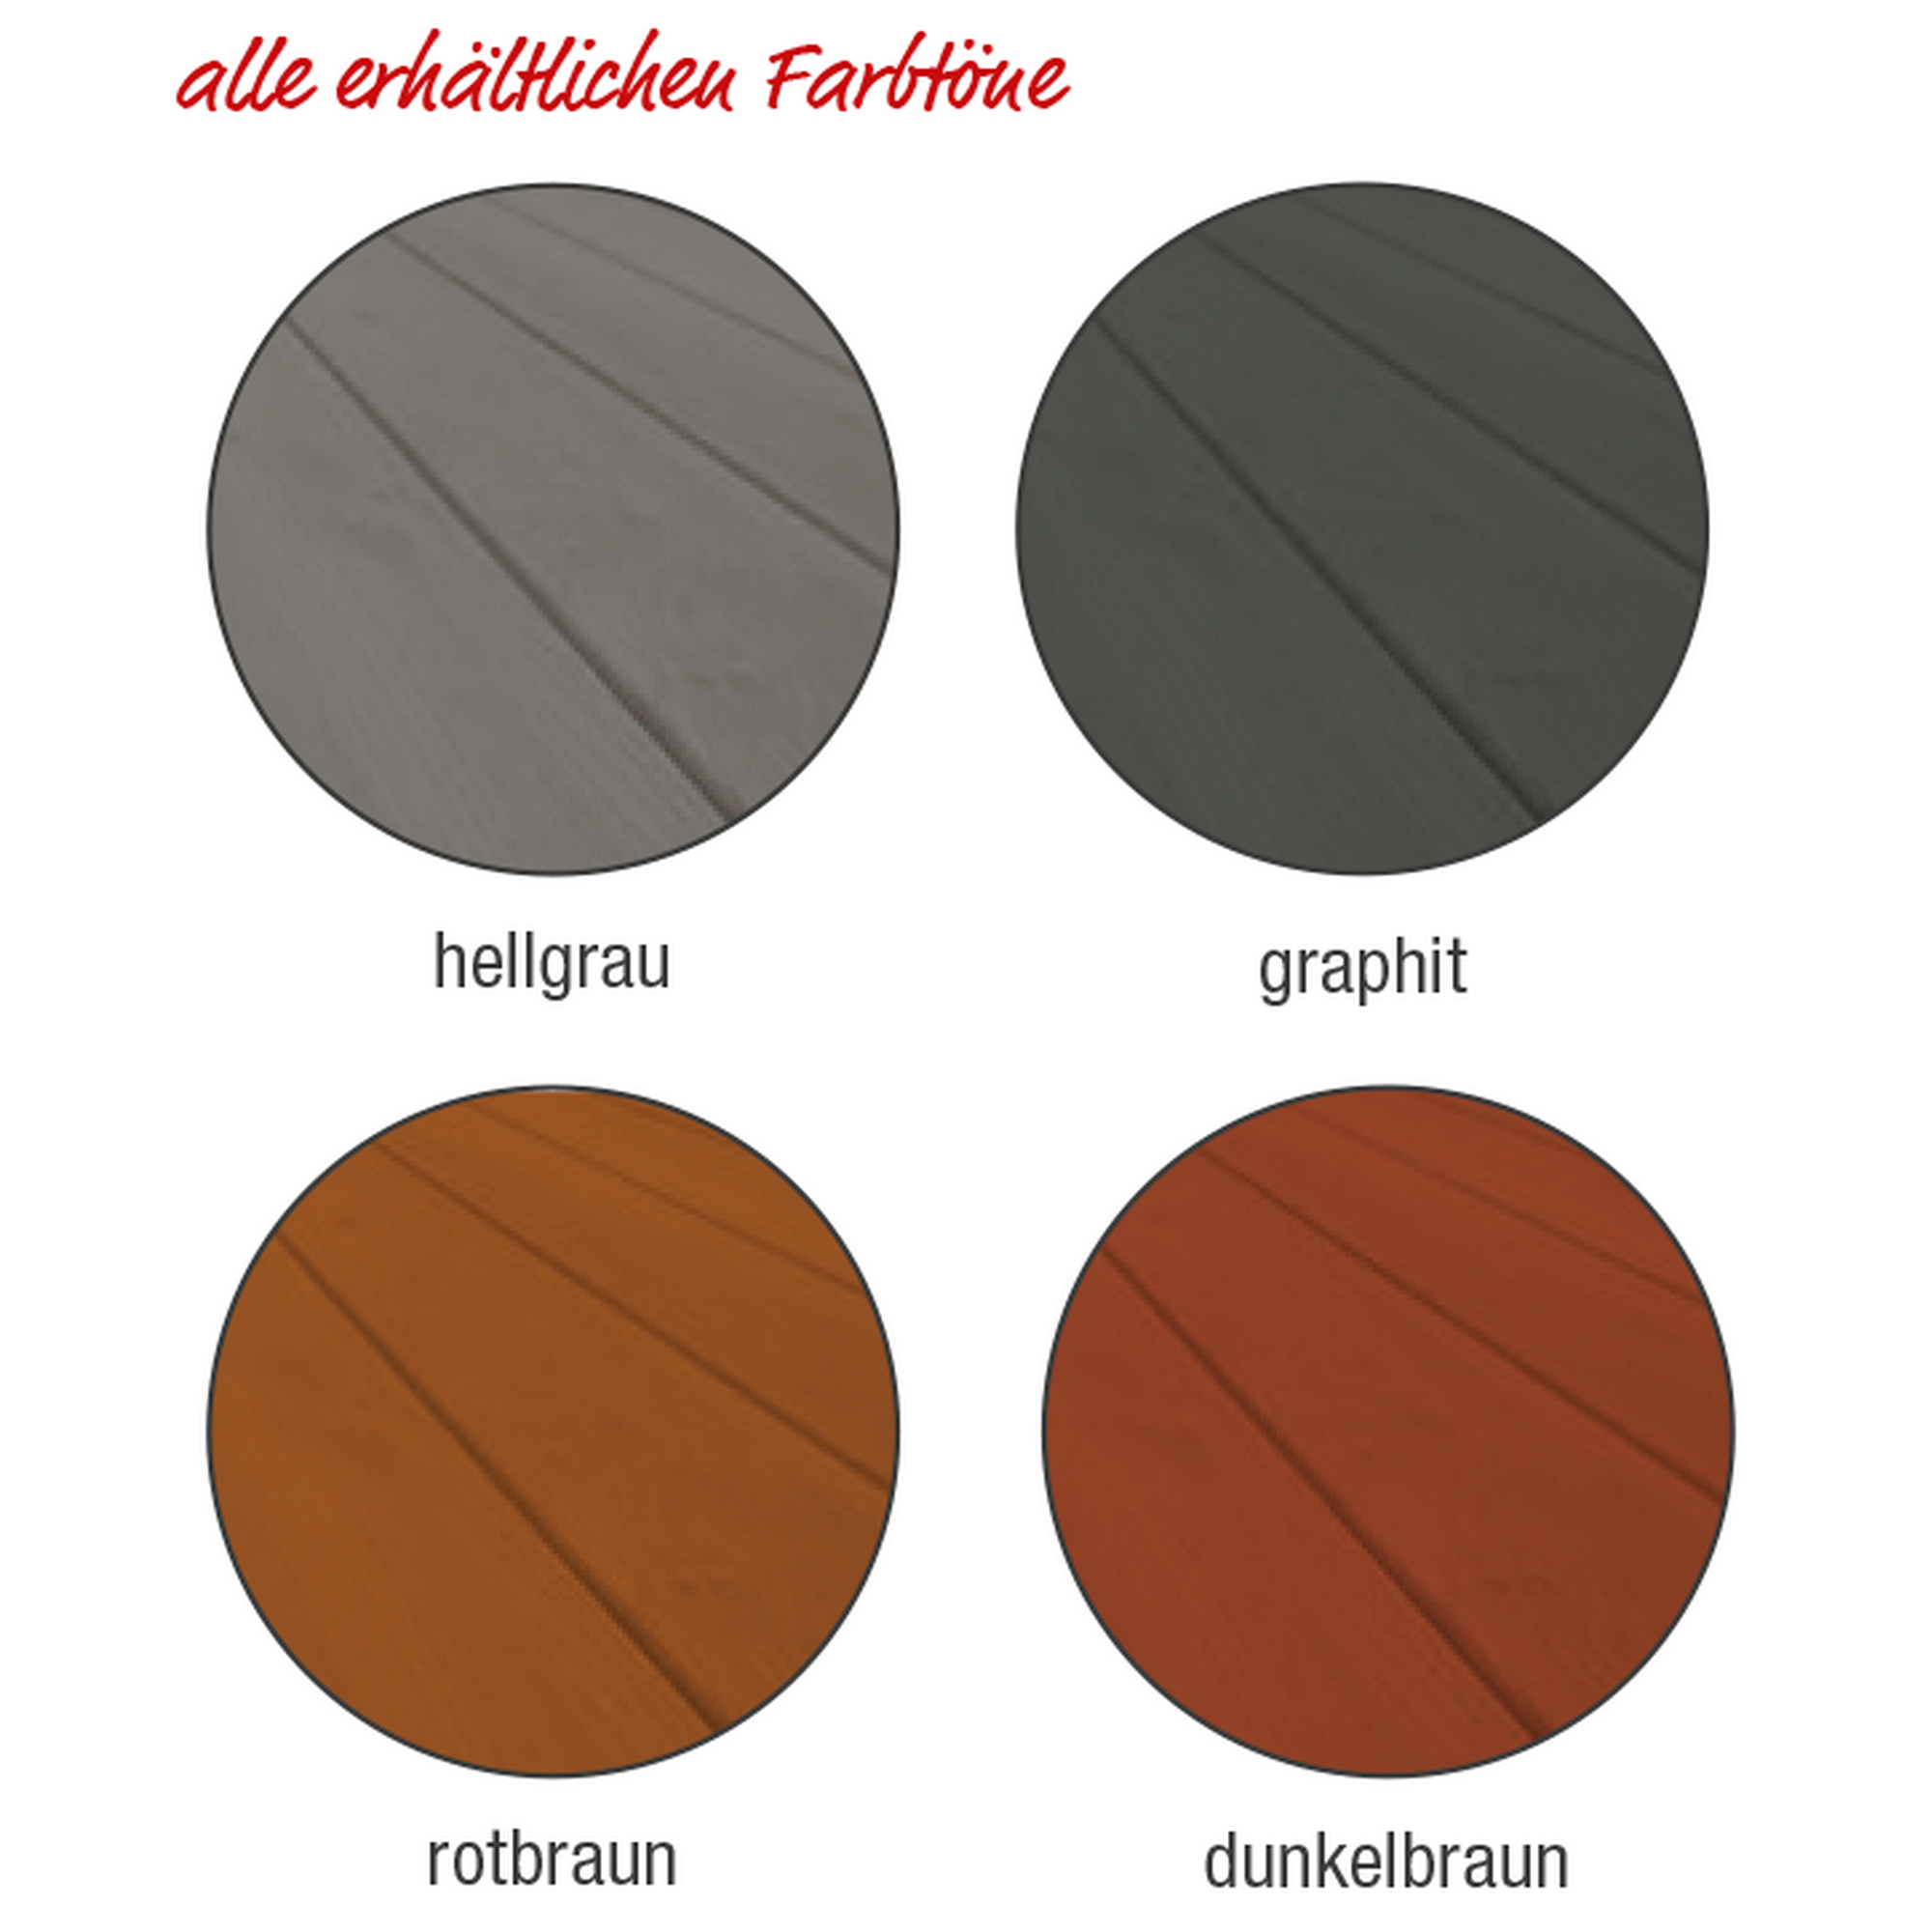 Renovierfarbe für Terrassen graphitfarben matt 2,5 l + product picture